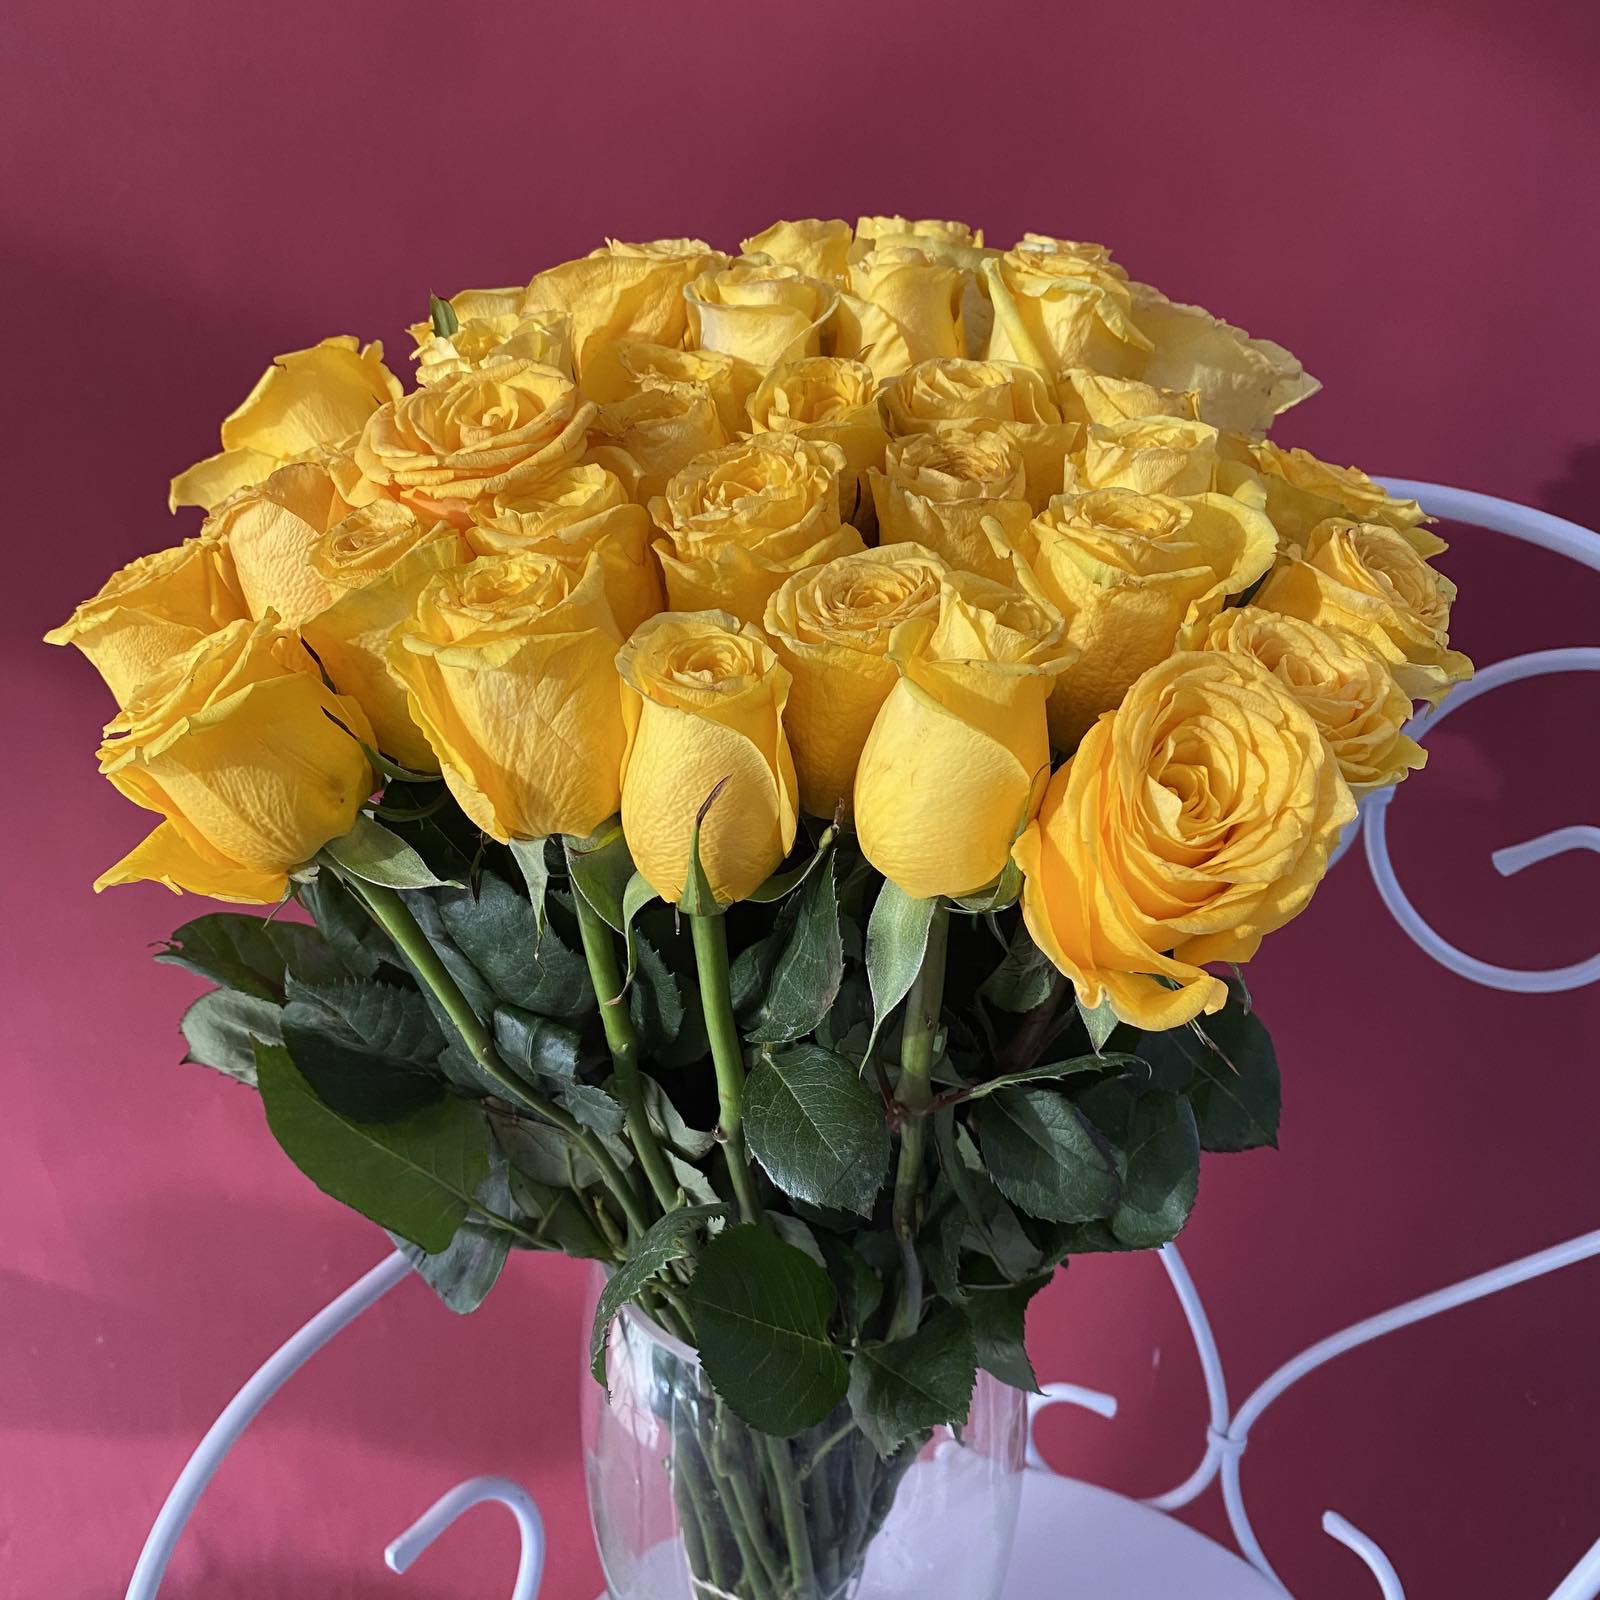 Желтая роза 40 см